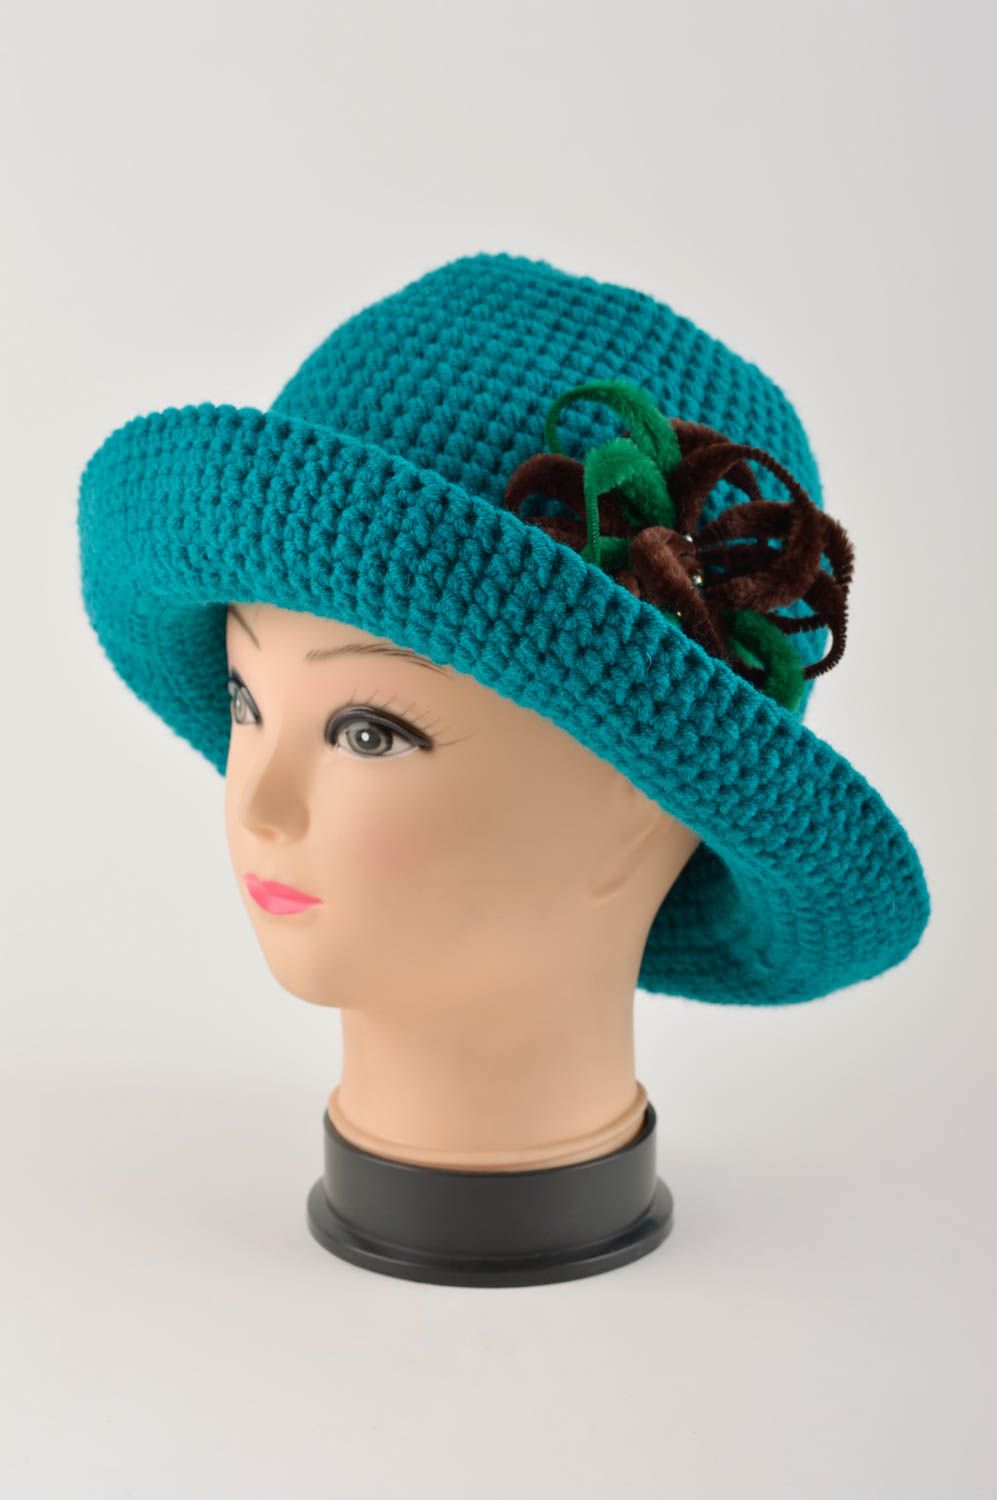 Handmade hat designer hat unusual headwear for girls gift ideas hat for coat photo 2